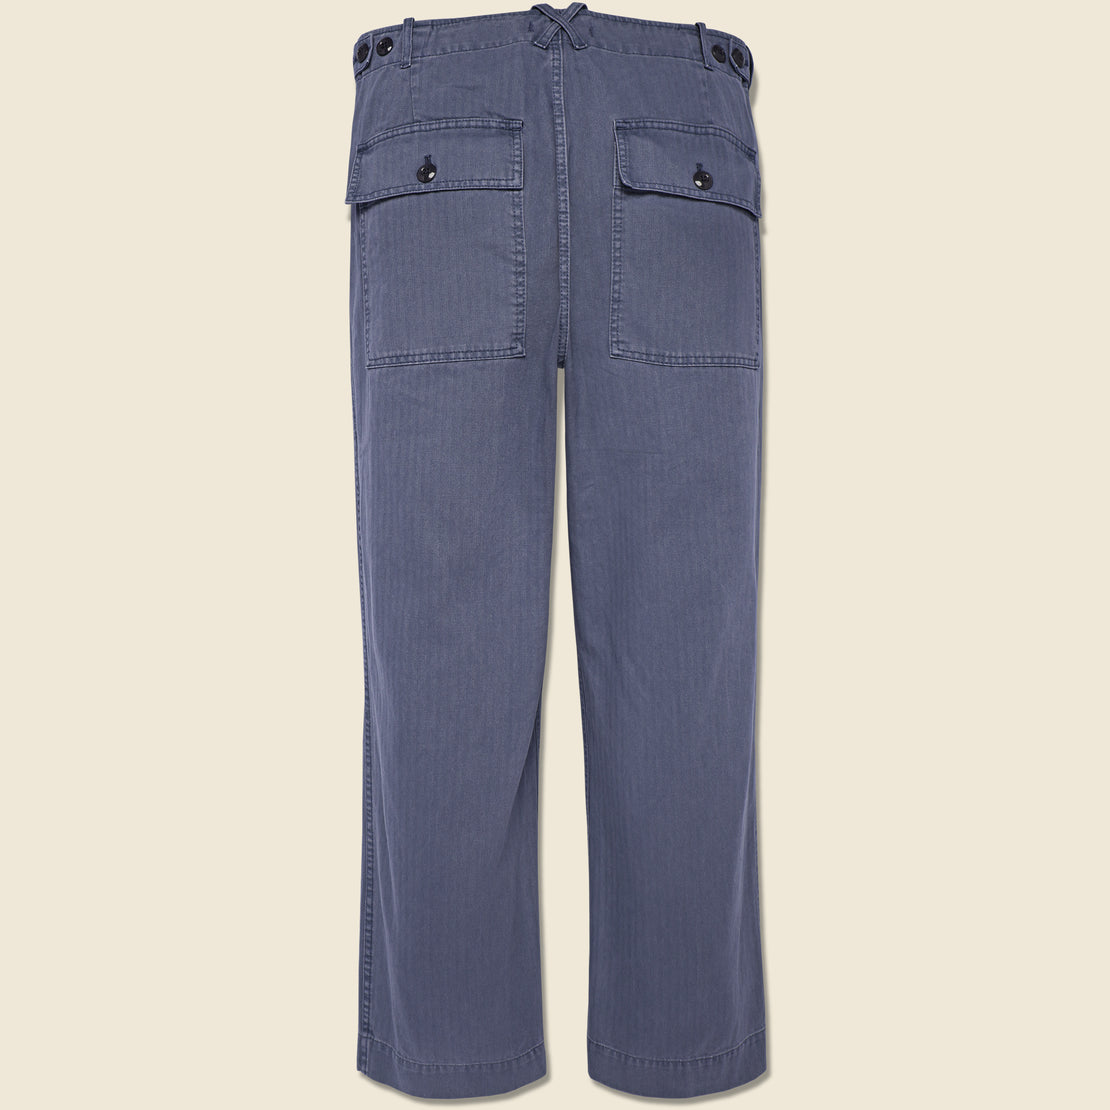 Cotton Herringbone Field Pant - Storm Blue - Alex Mill - STAG Provisions - Pants - Twill